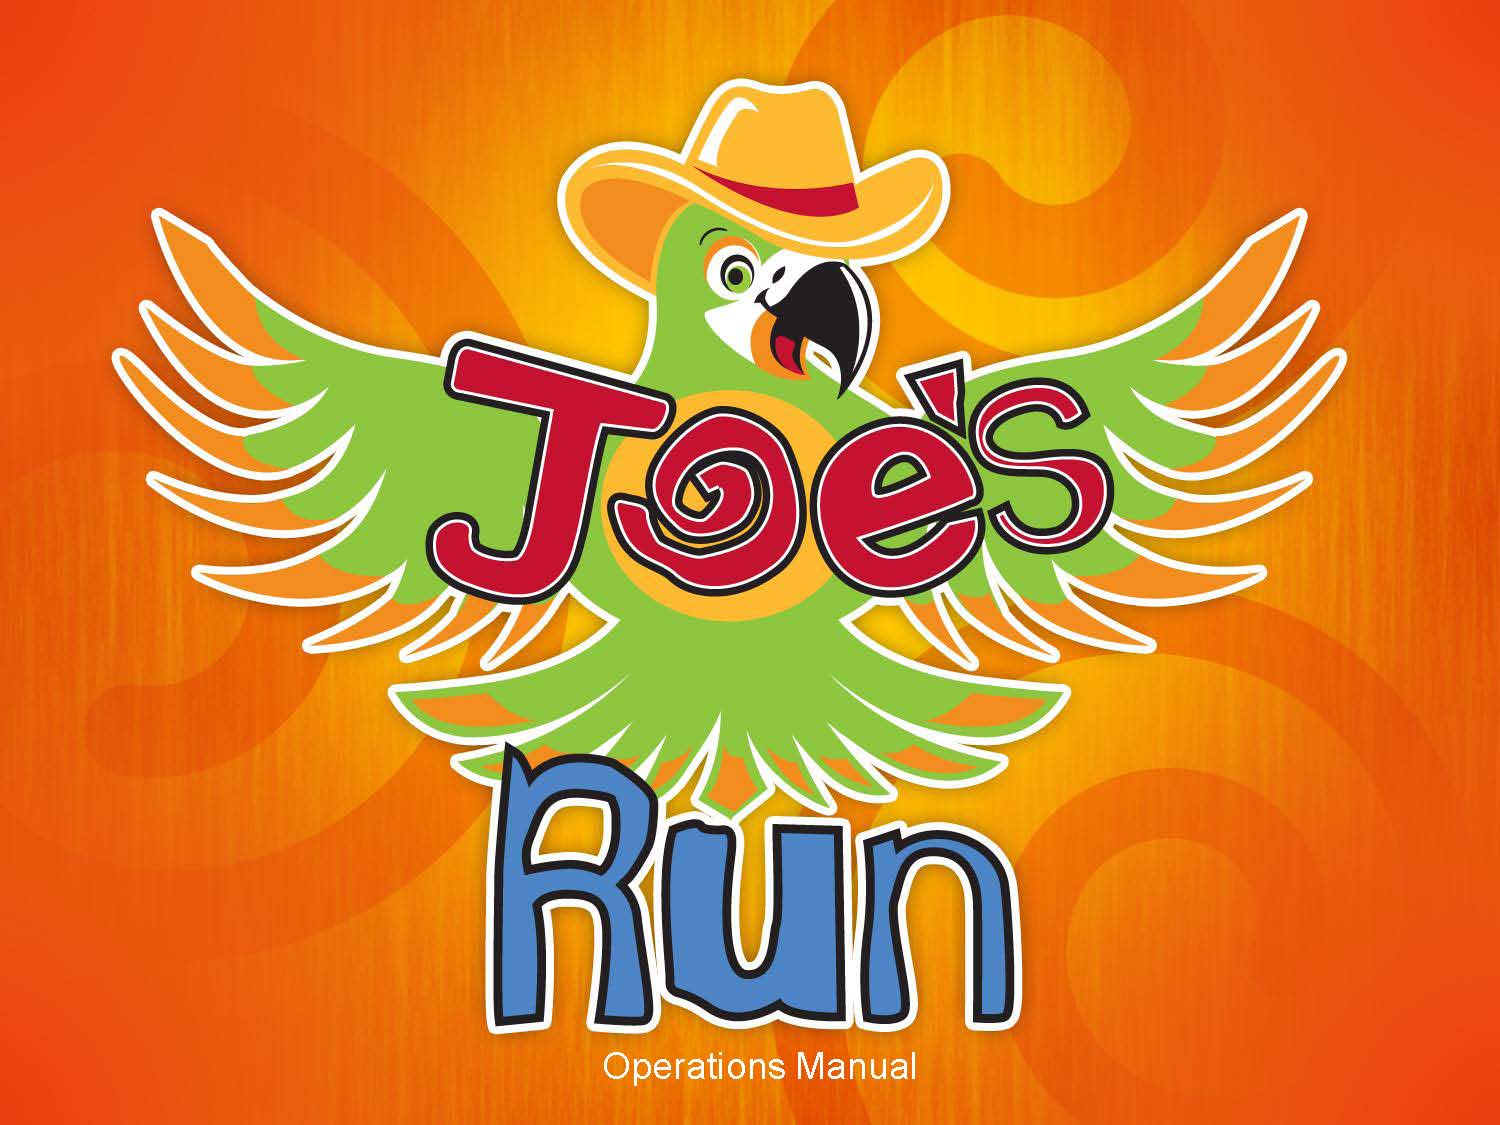 Joe's Run 5K age group